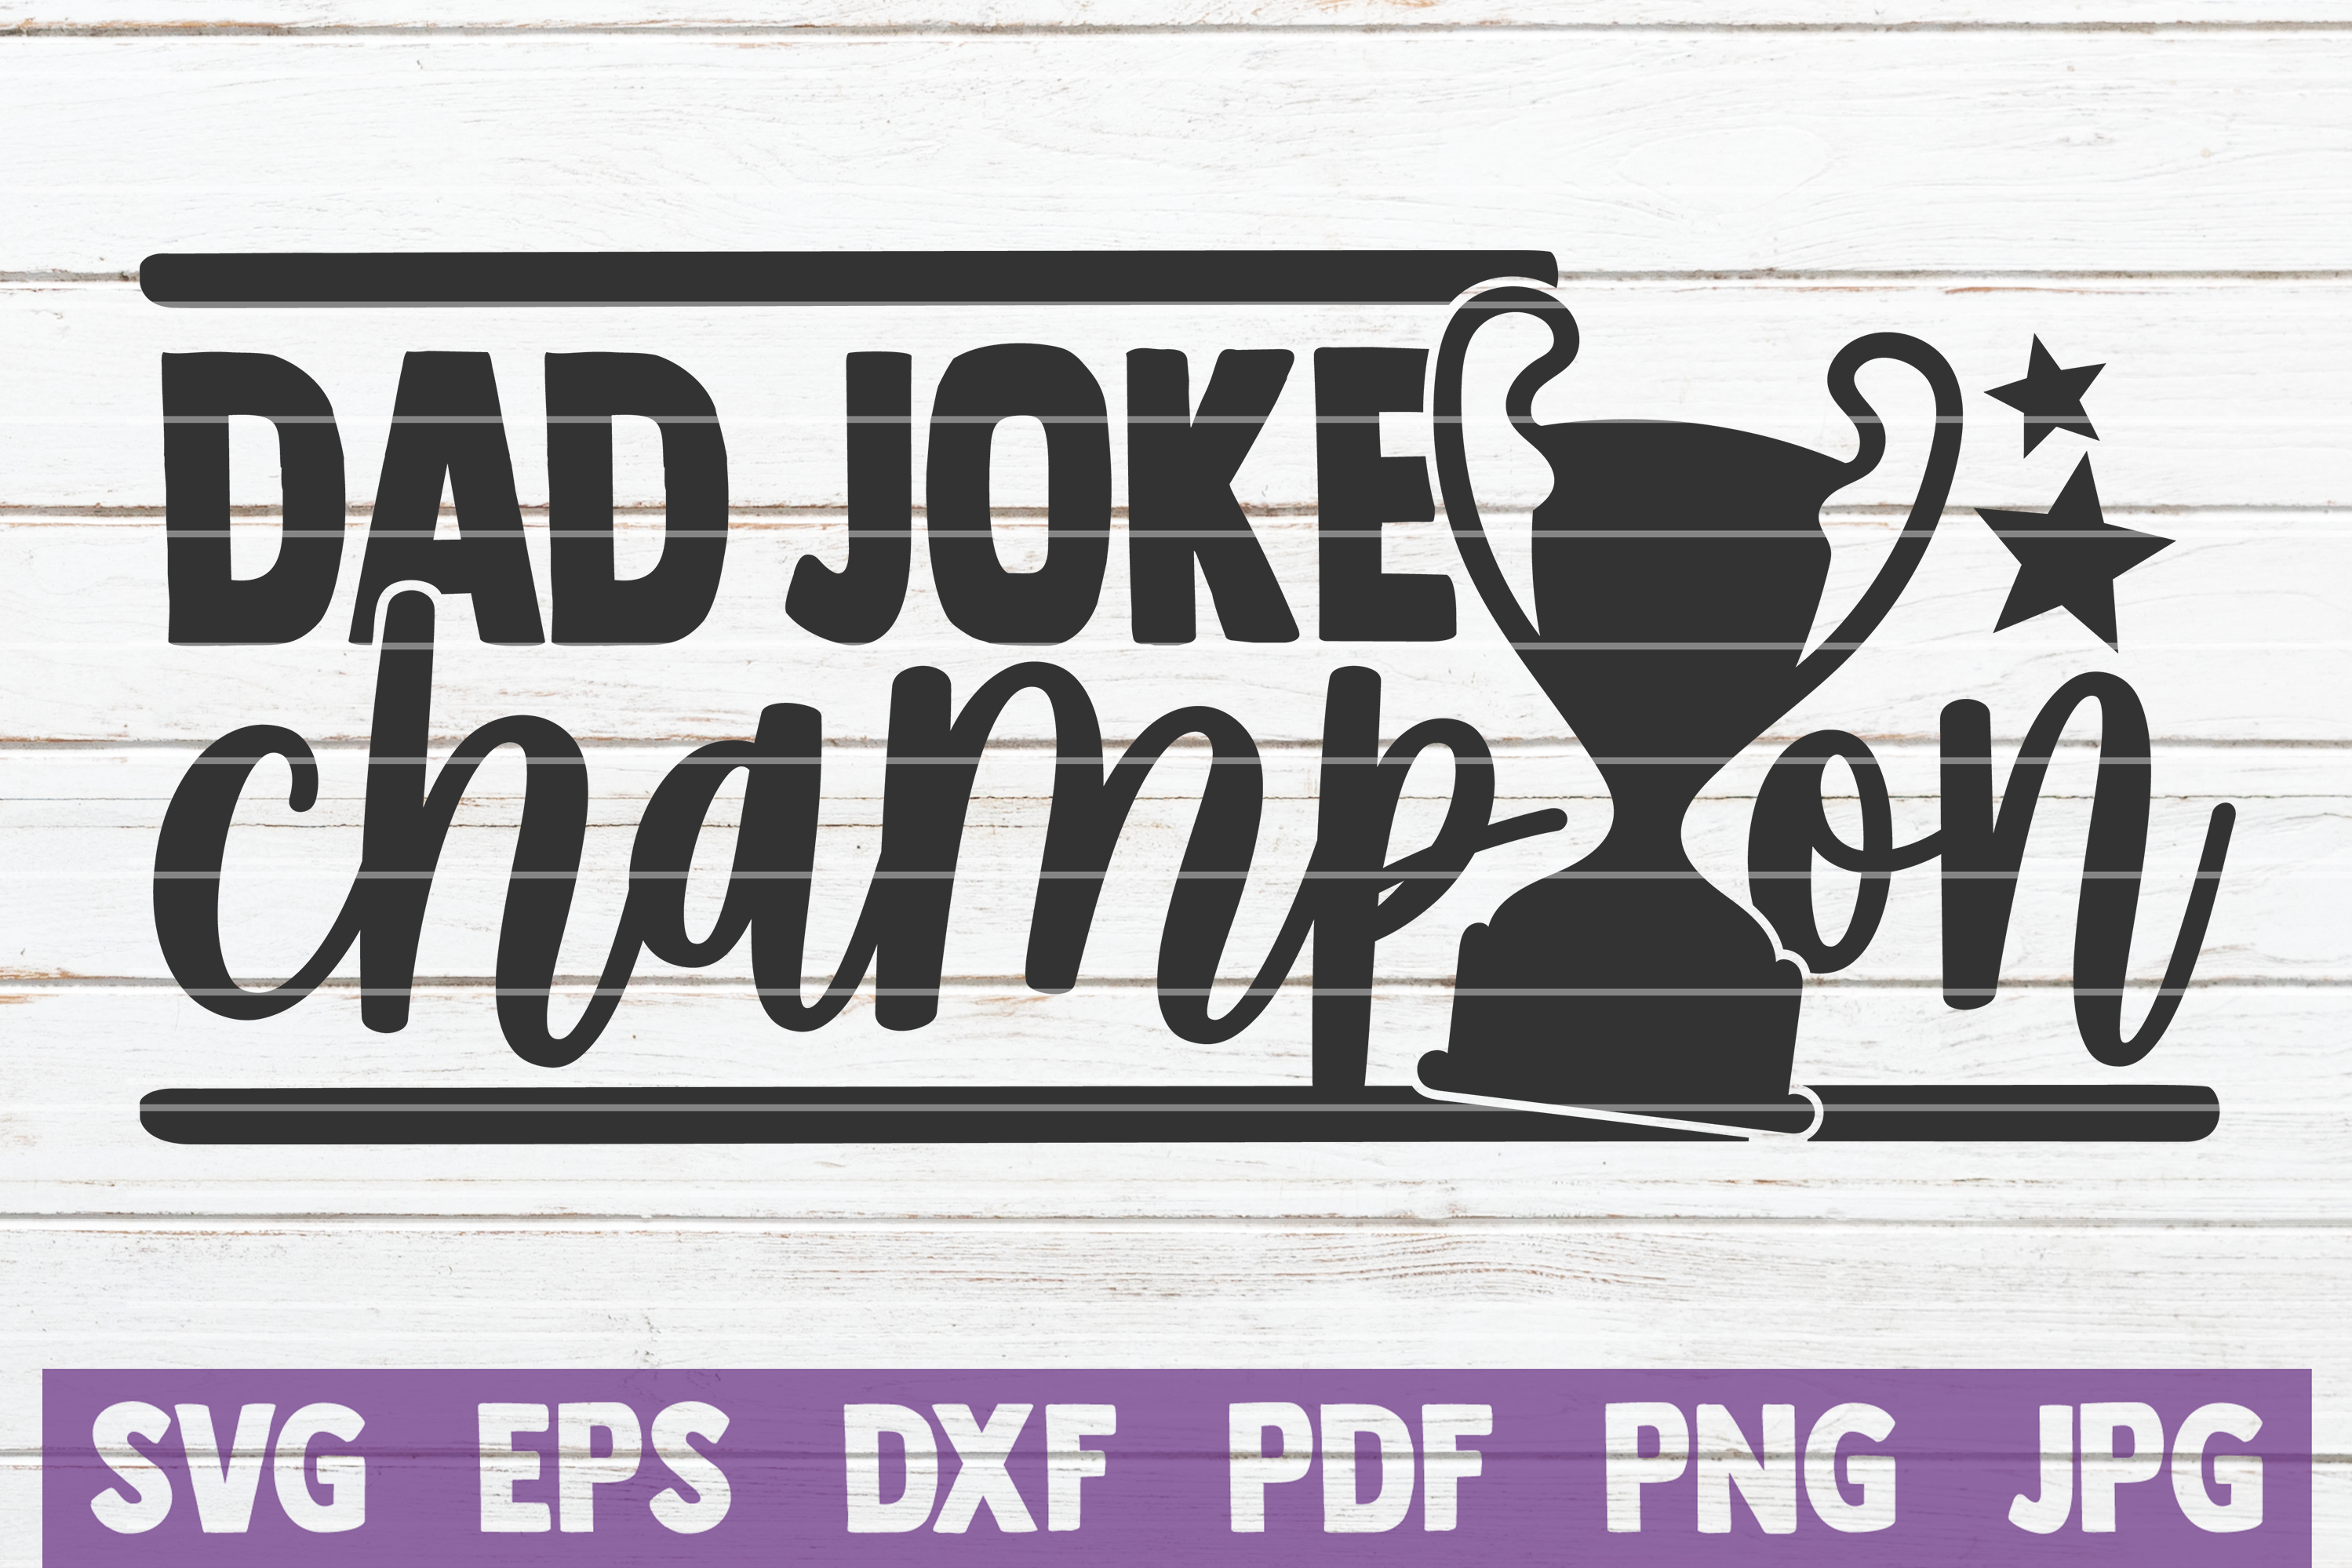 Download Dad Joke Champion SVG Cut File